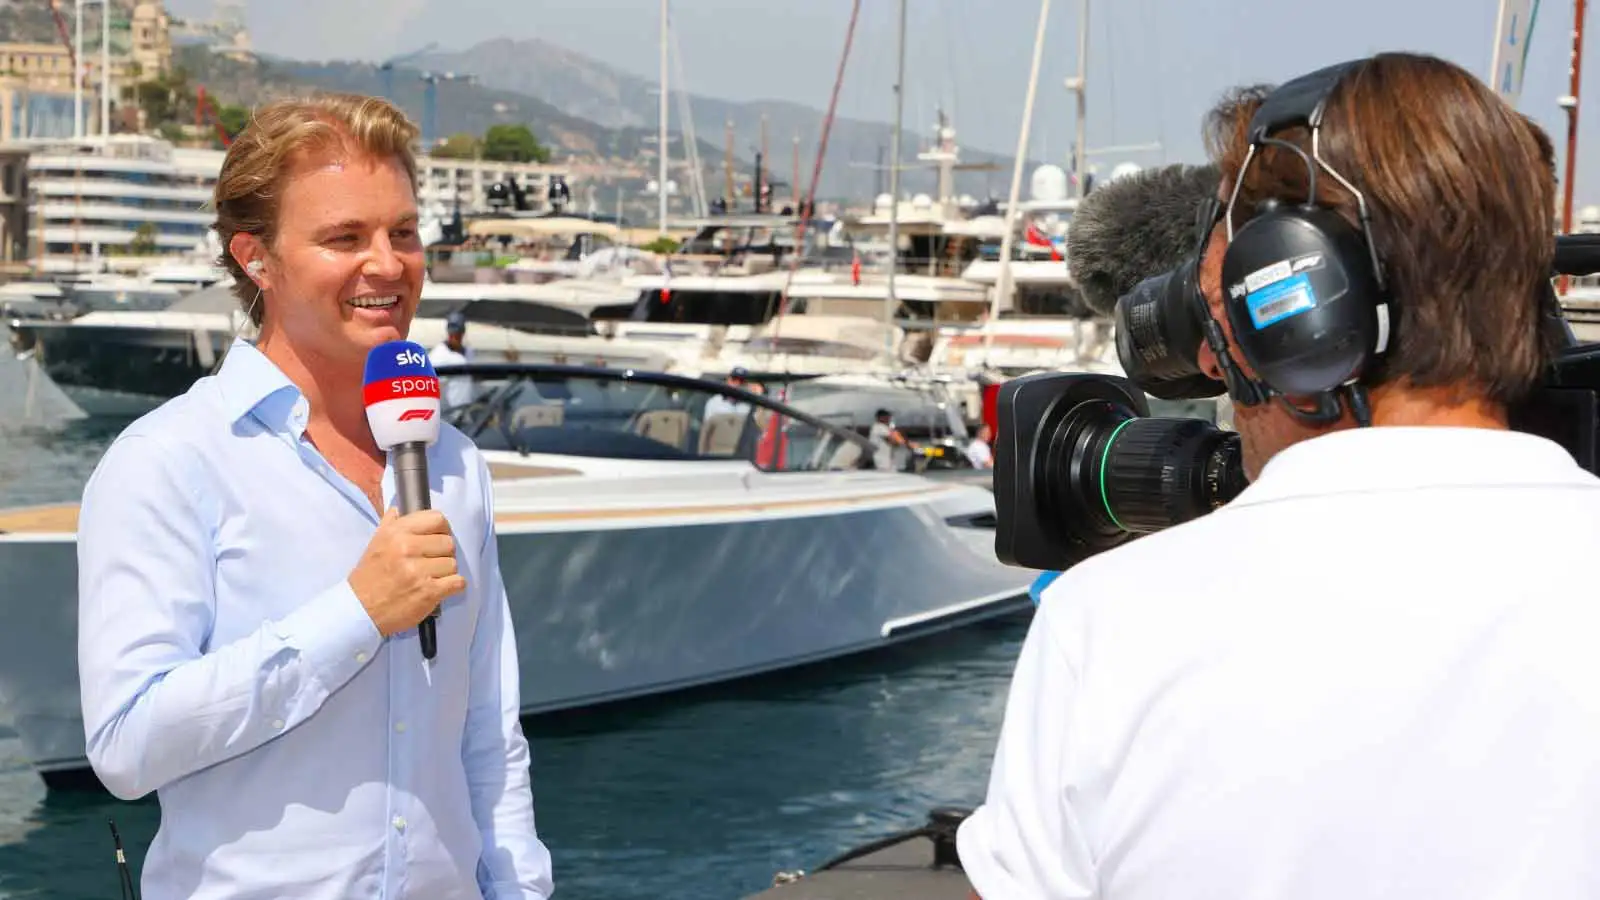 Nico Rosberg broadcasts for Sky. Monaco May 2022.